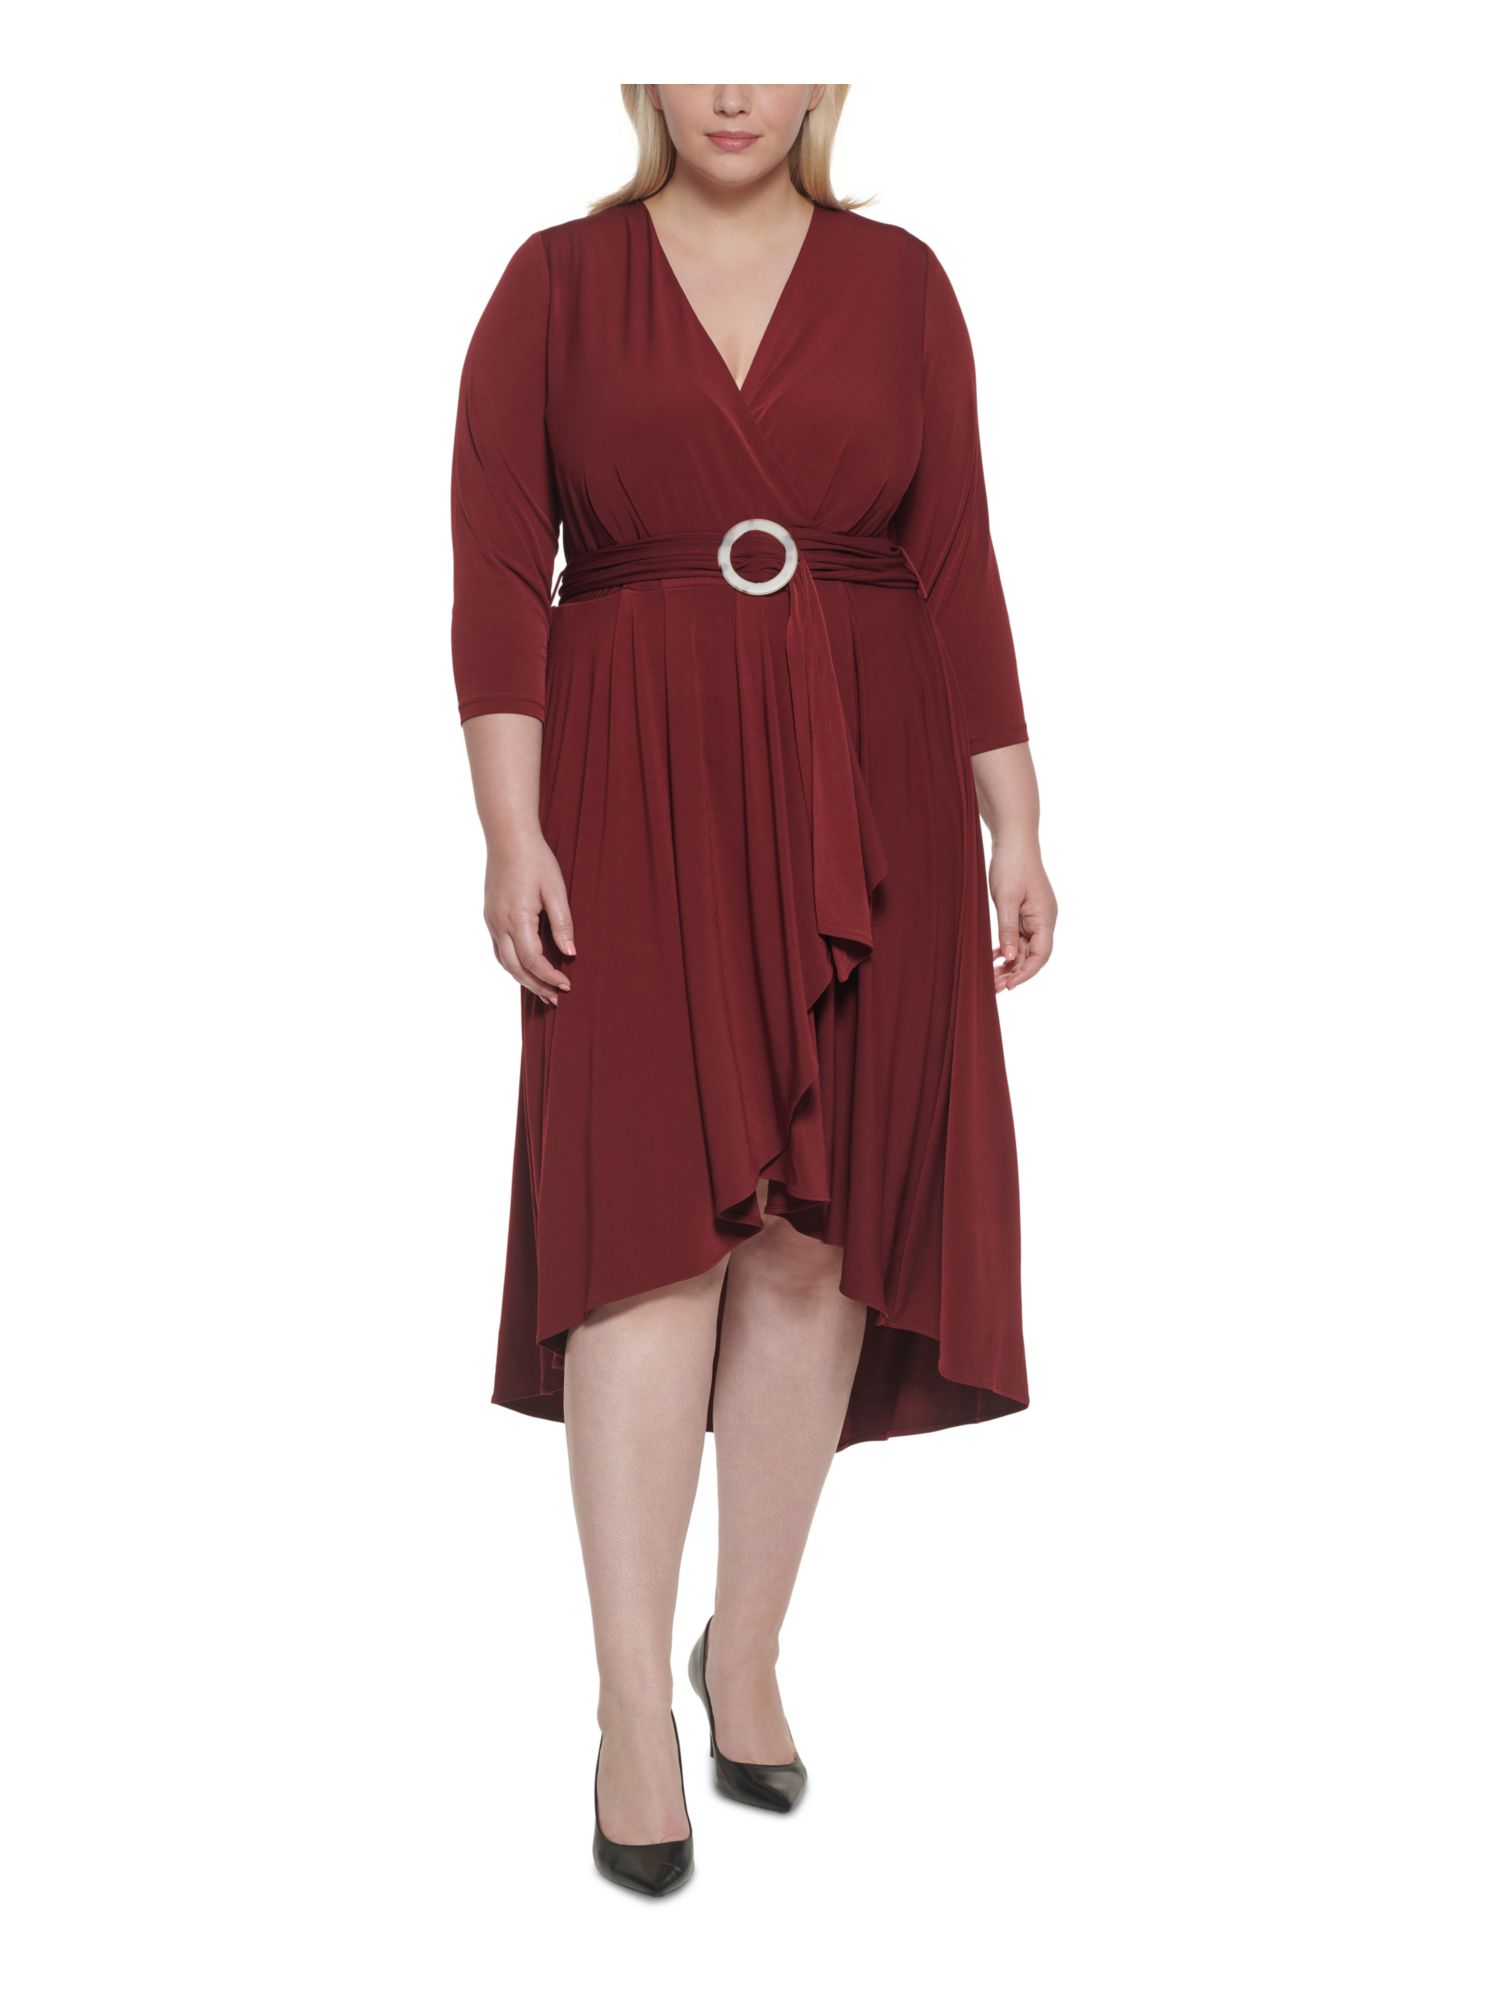 Descubrir 57+ imagen maroon calvin klein dress 